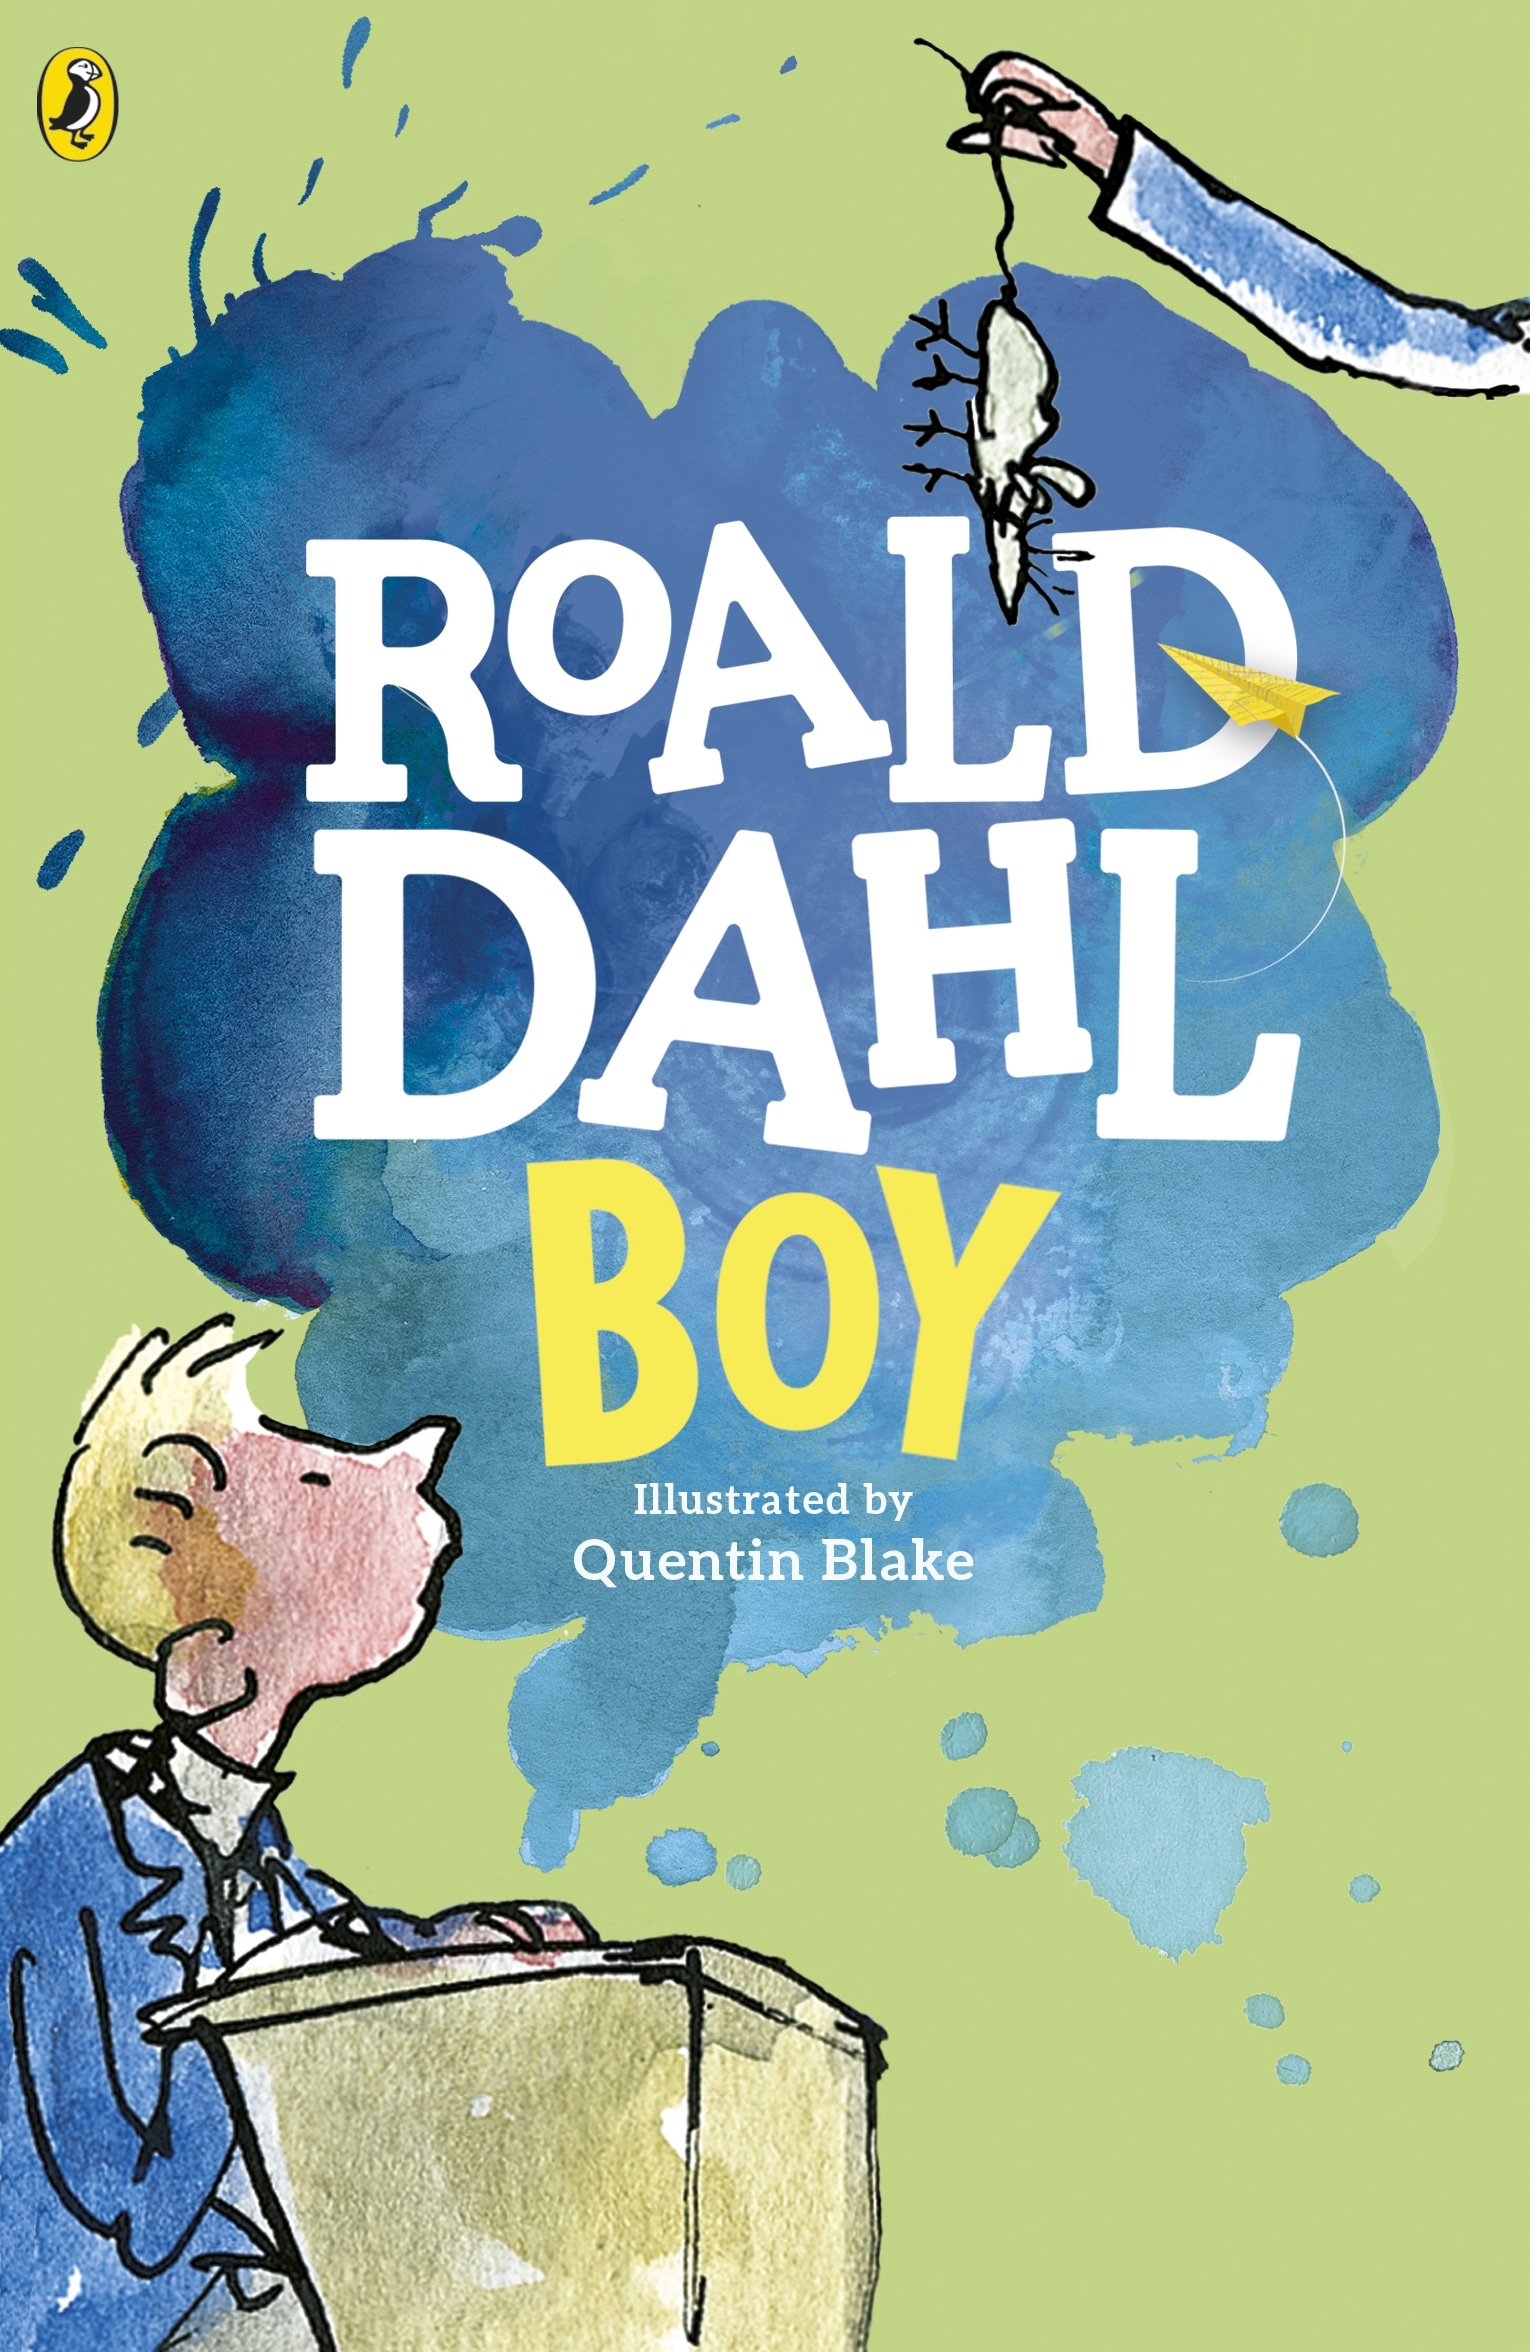 Book “Boy” by Roald Dahl — February 11, 2016